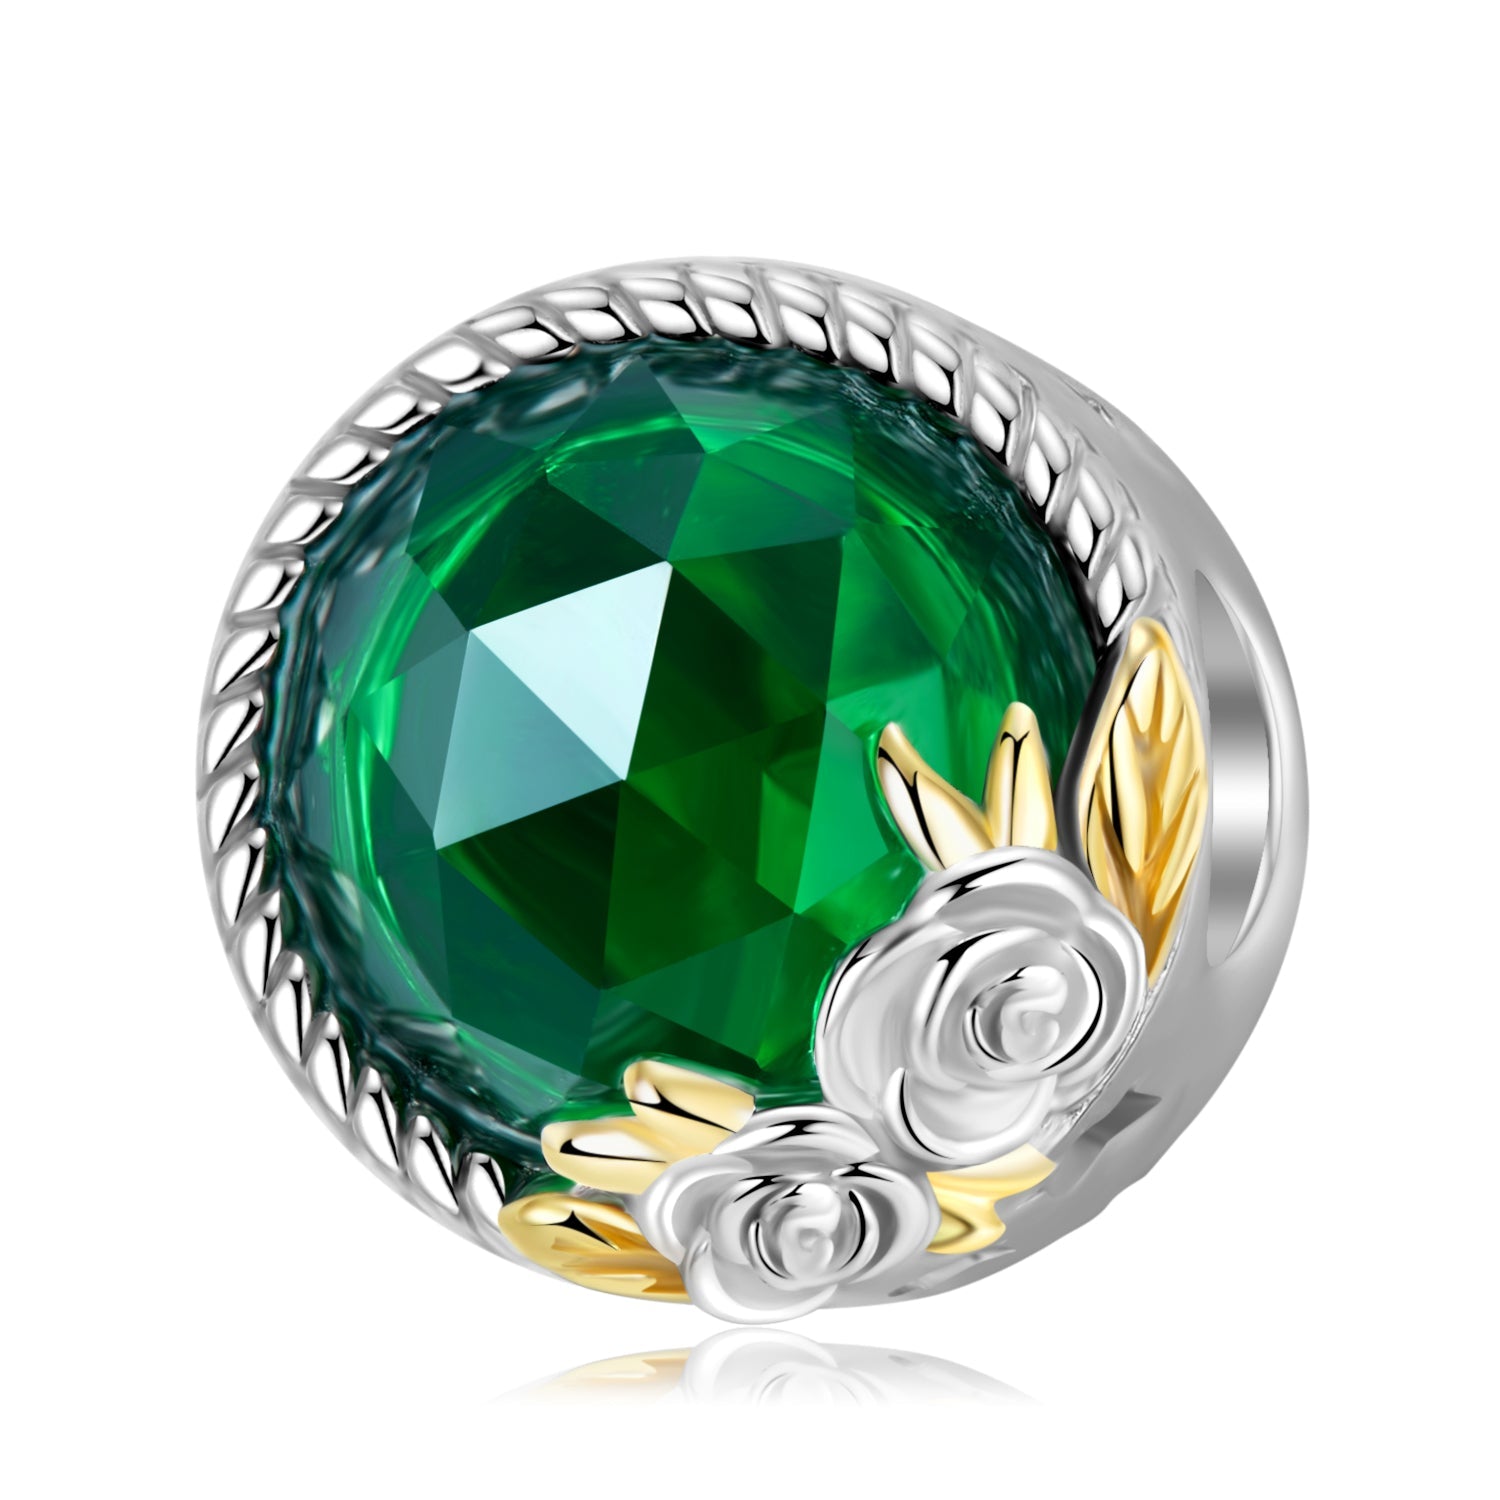 Green gemstone